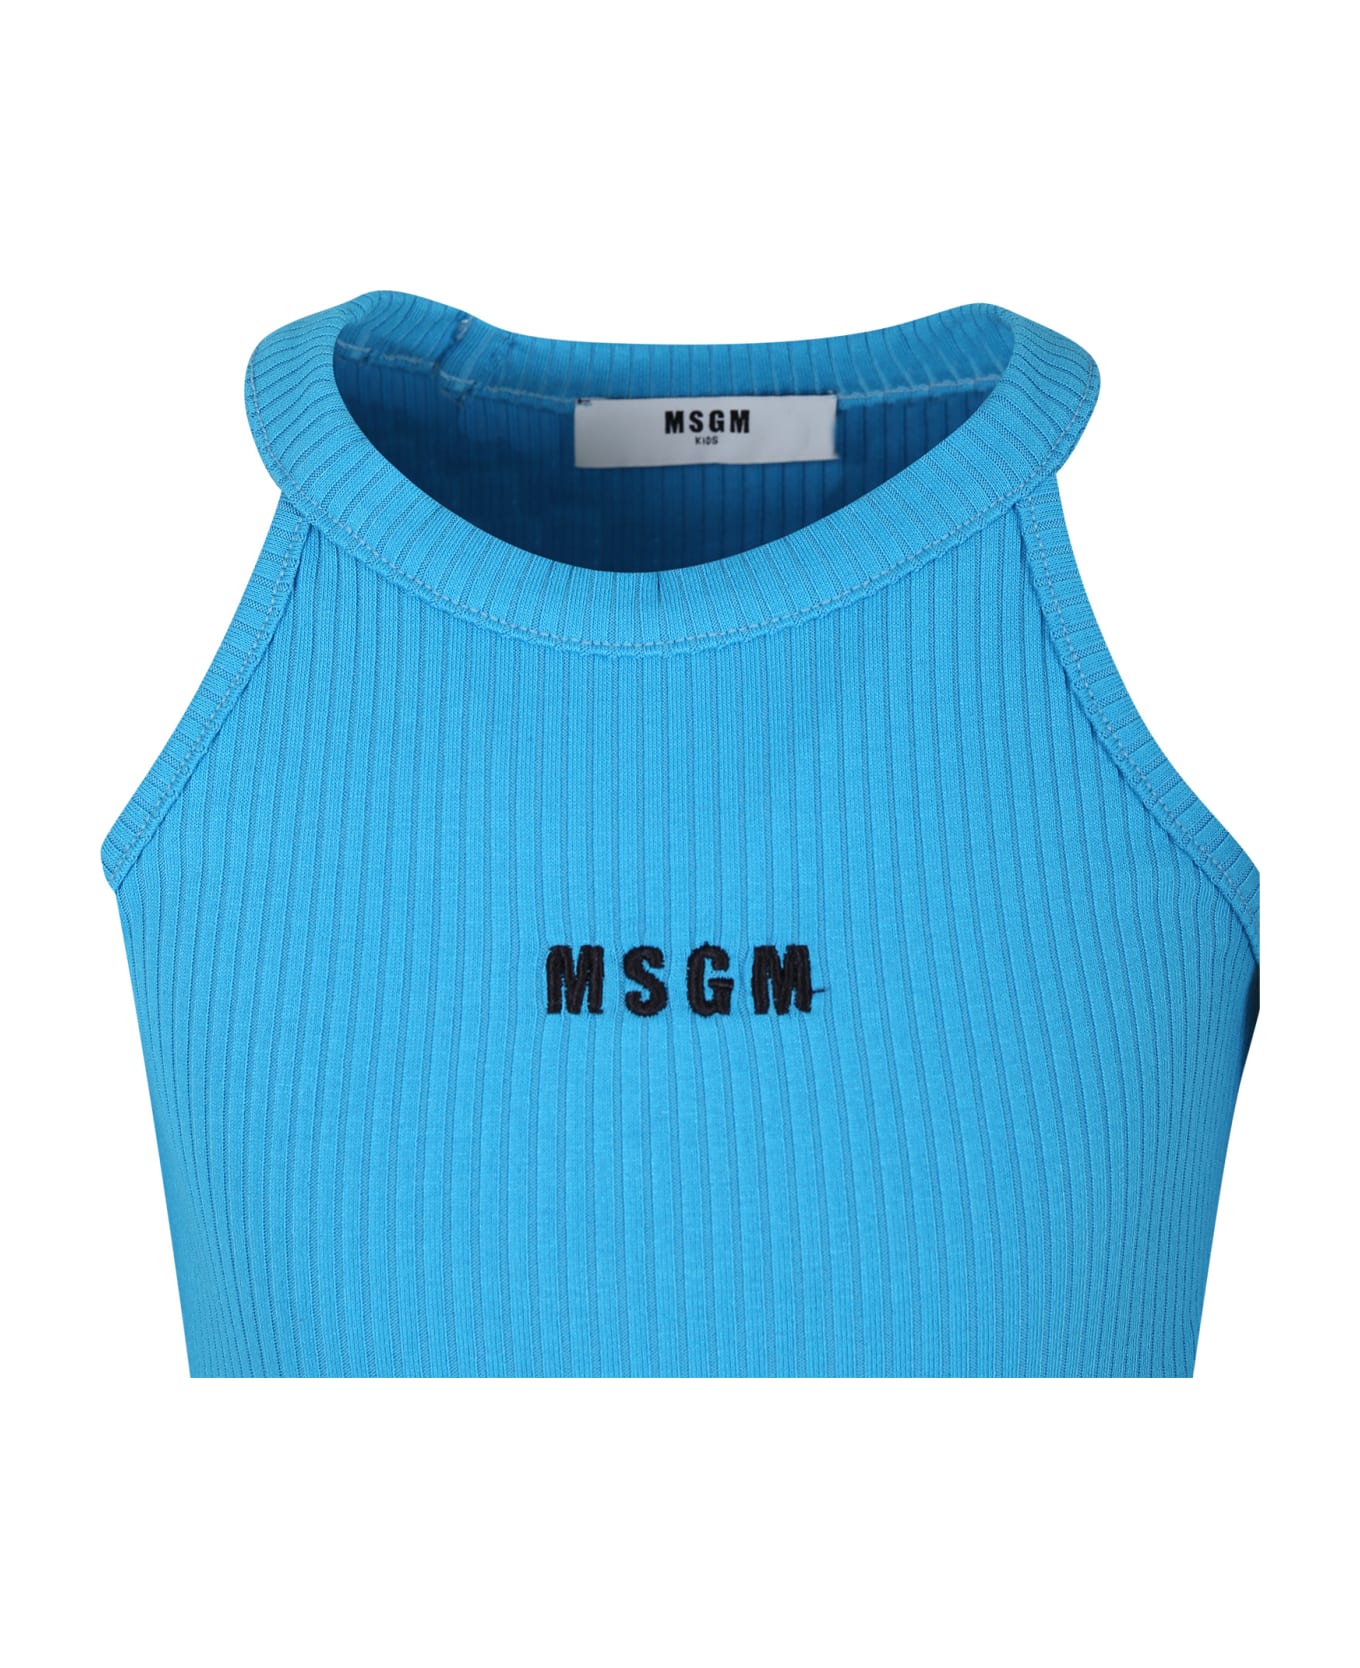 MSGM Light Blue Tank Top For Girl With Logo - Light Blue